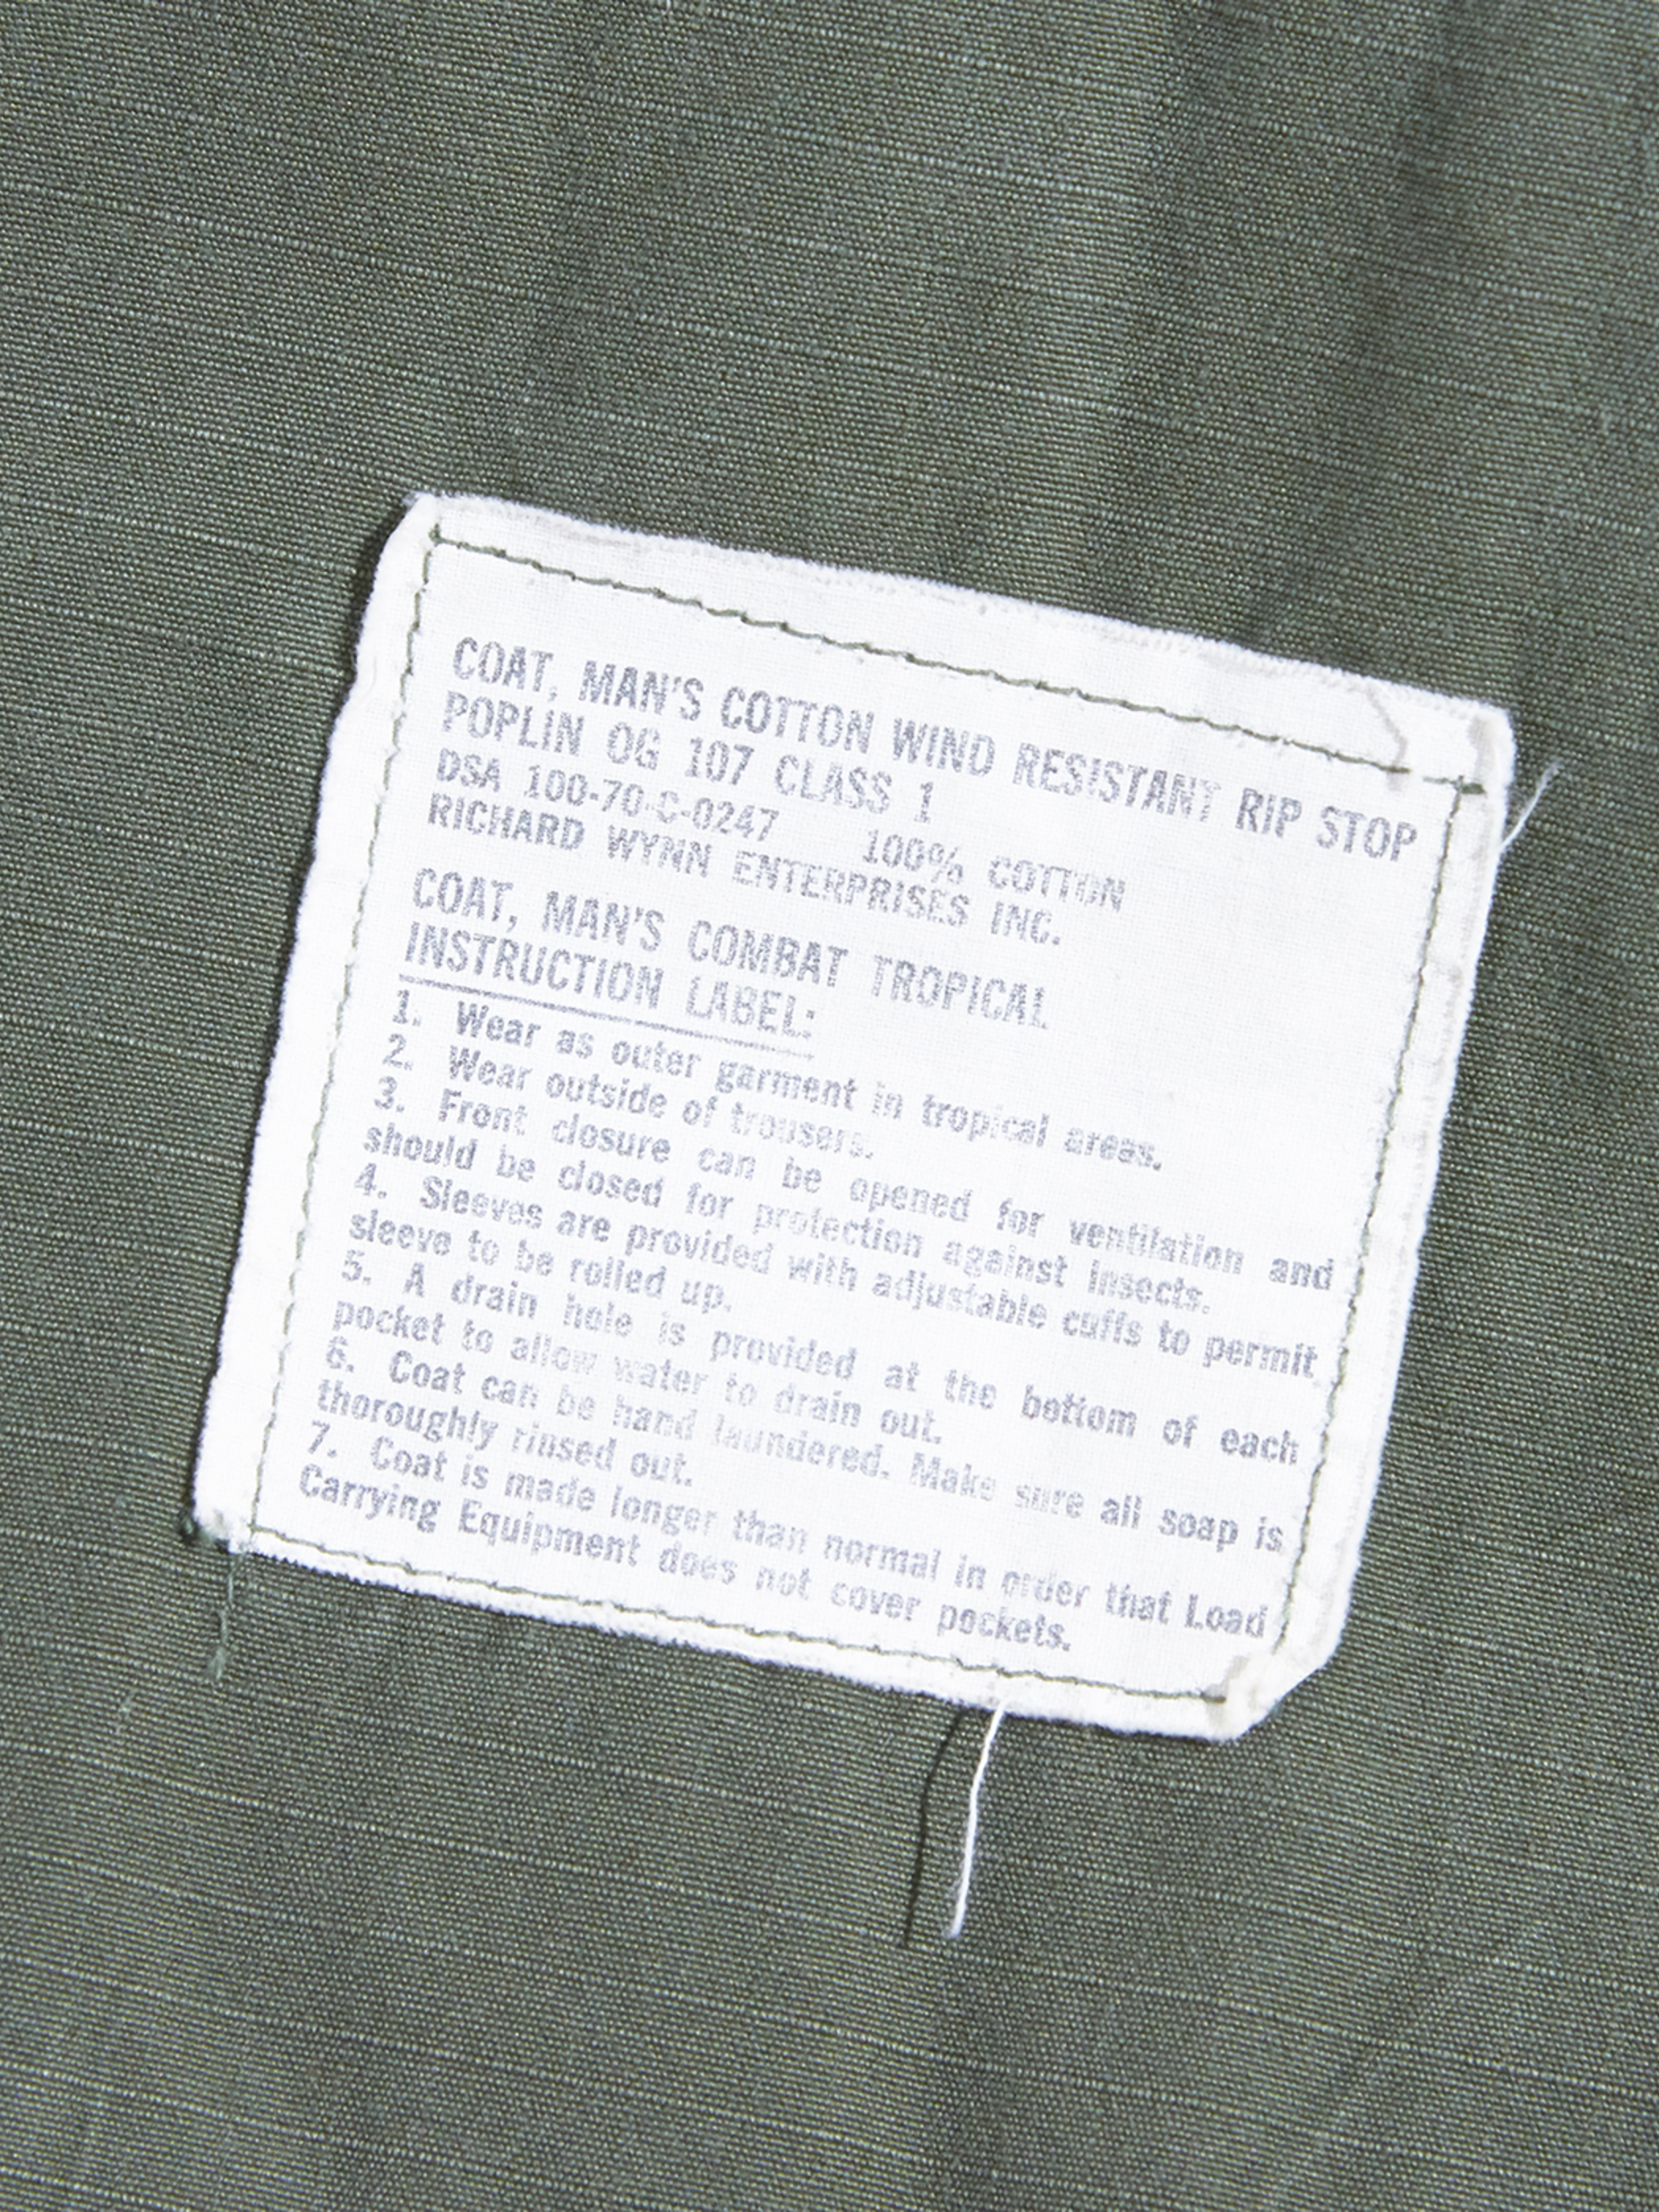 1970y "US ARMY" 5th jungle fatigue shirt -OLIVE-